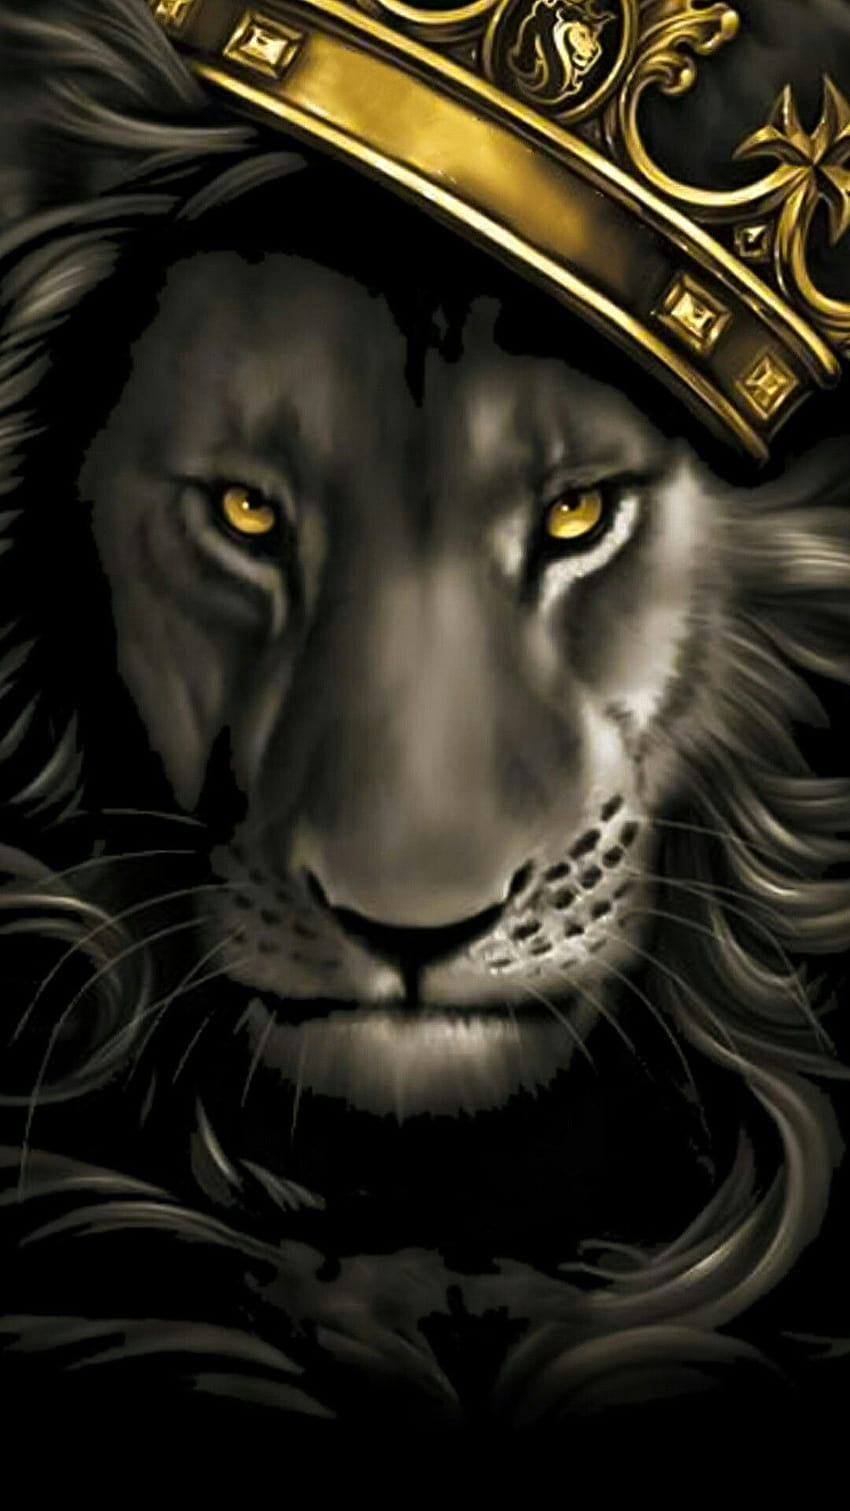 GOLDEN LION HEAD - Gold Lion Logo - Posters and Art Prints | TeePublic